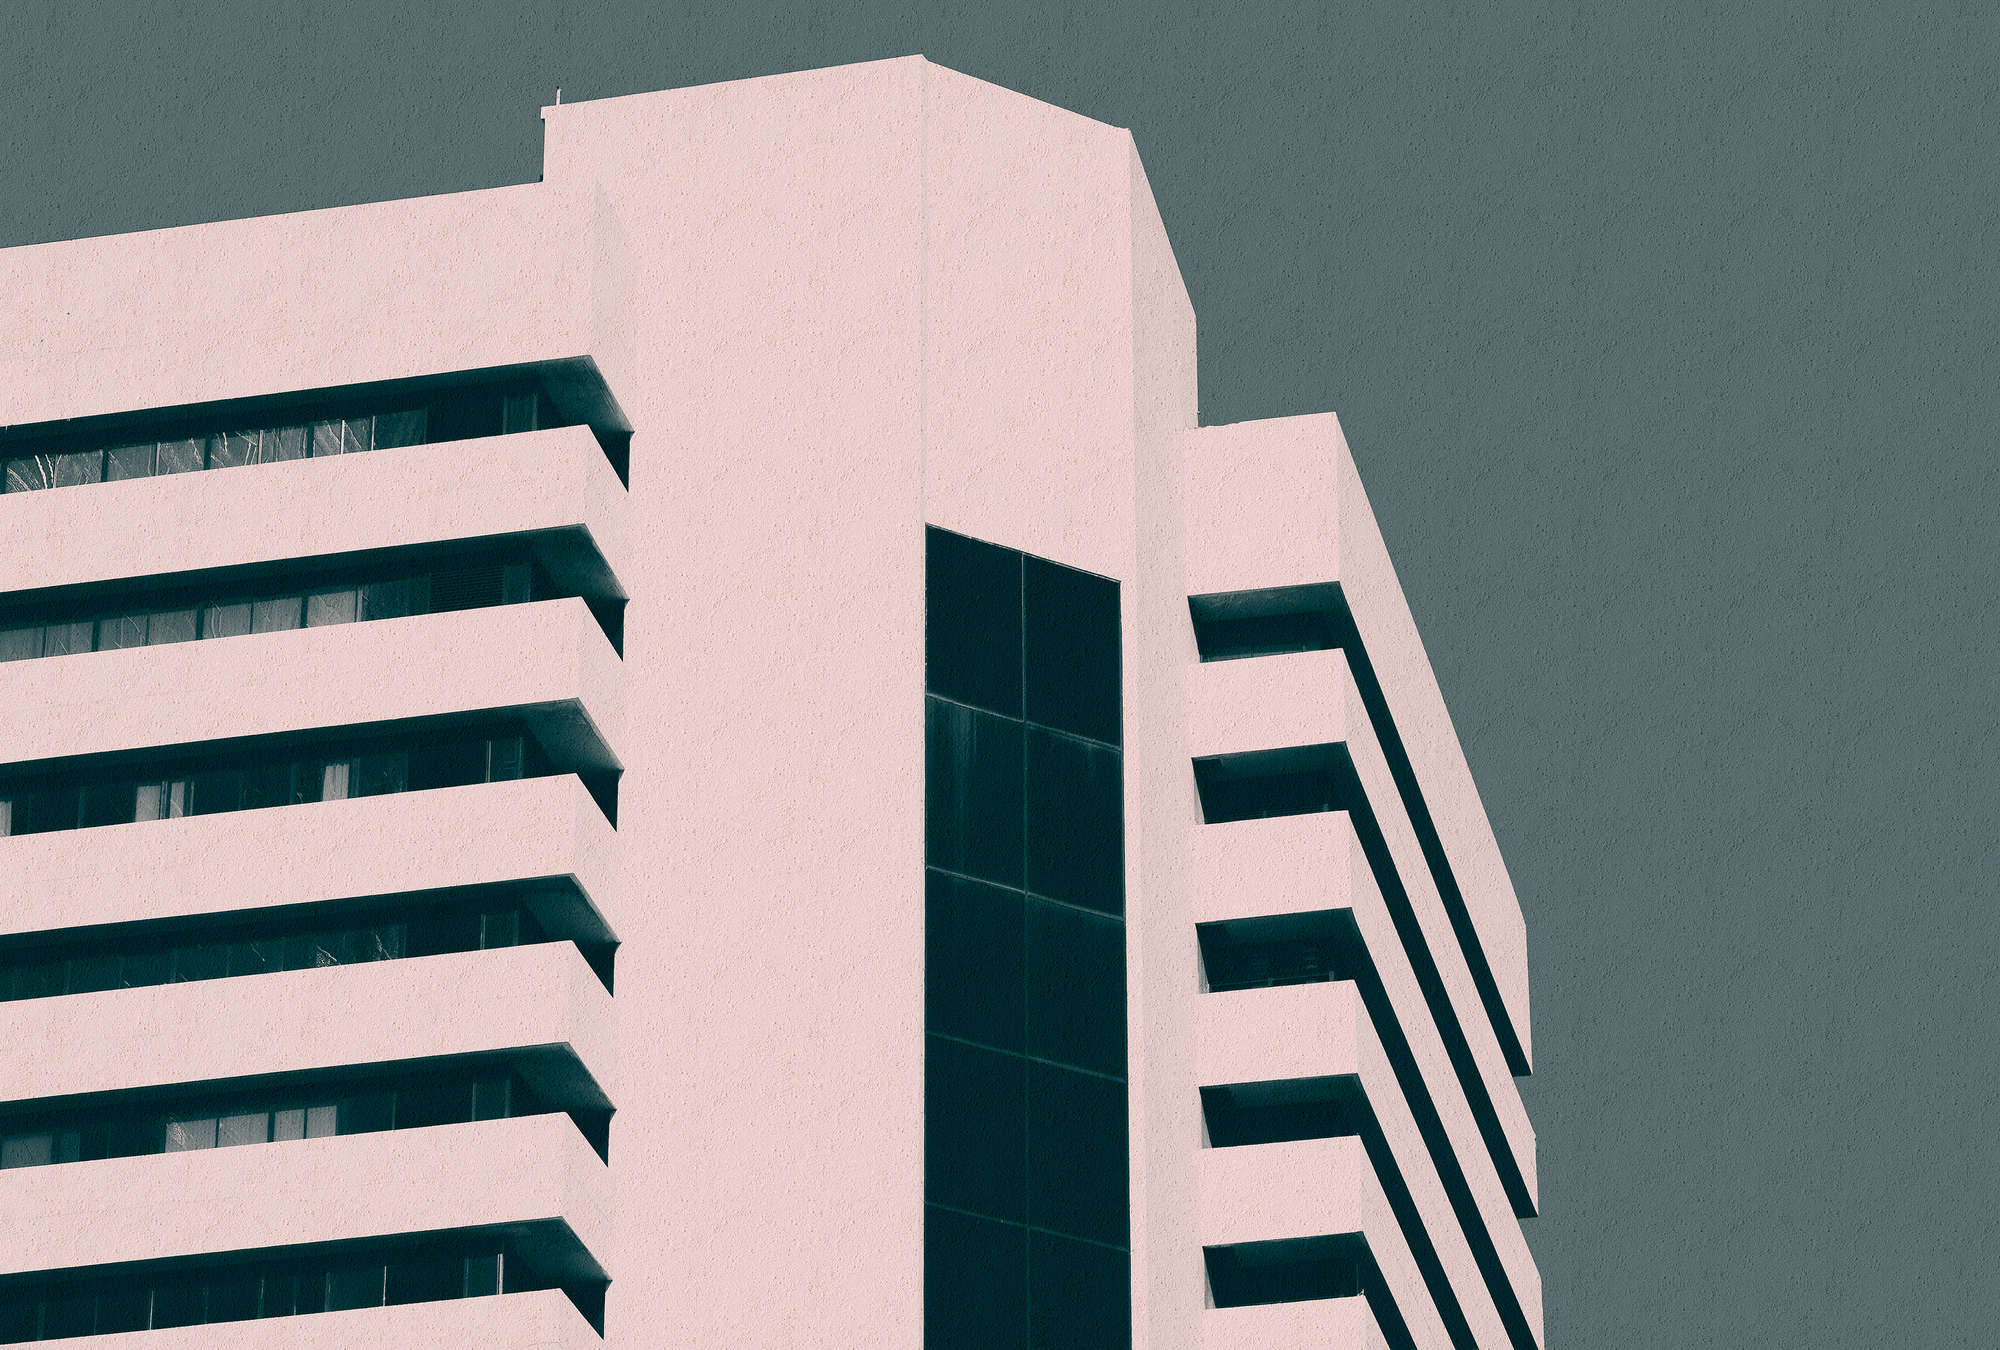             Wolkenkrabber 2 - Digital behang met moderne stadsarchitectuur - Raupuz structuur - Groen, Roze | Pearl glad vlies
        